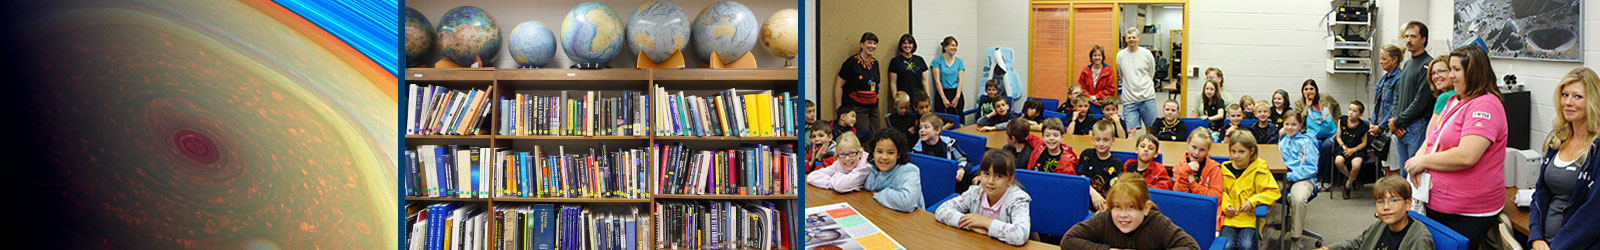 SPIF Banner: globes library visitors